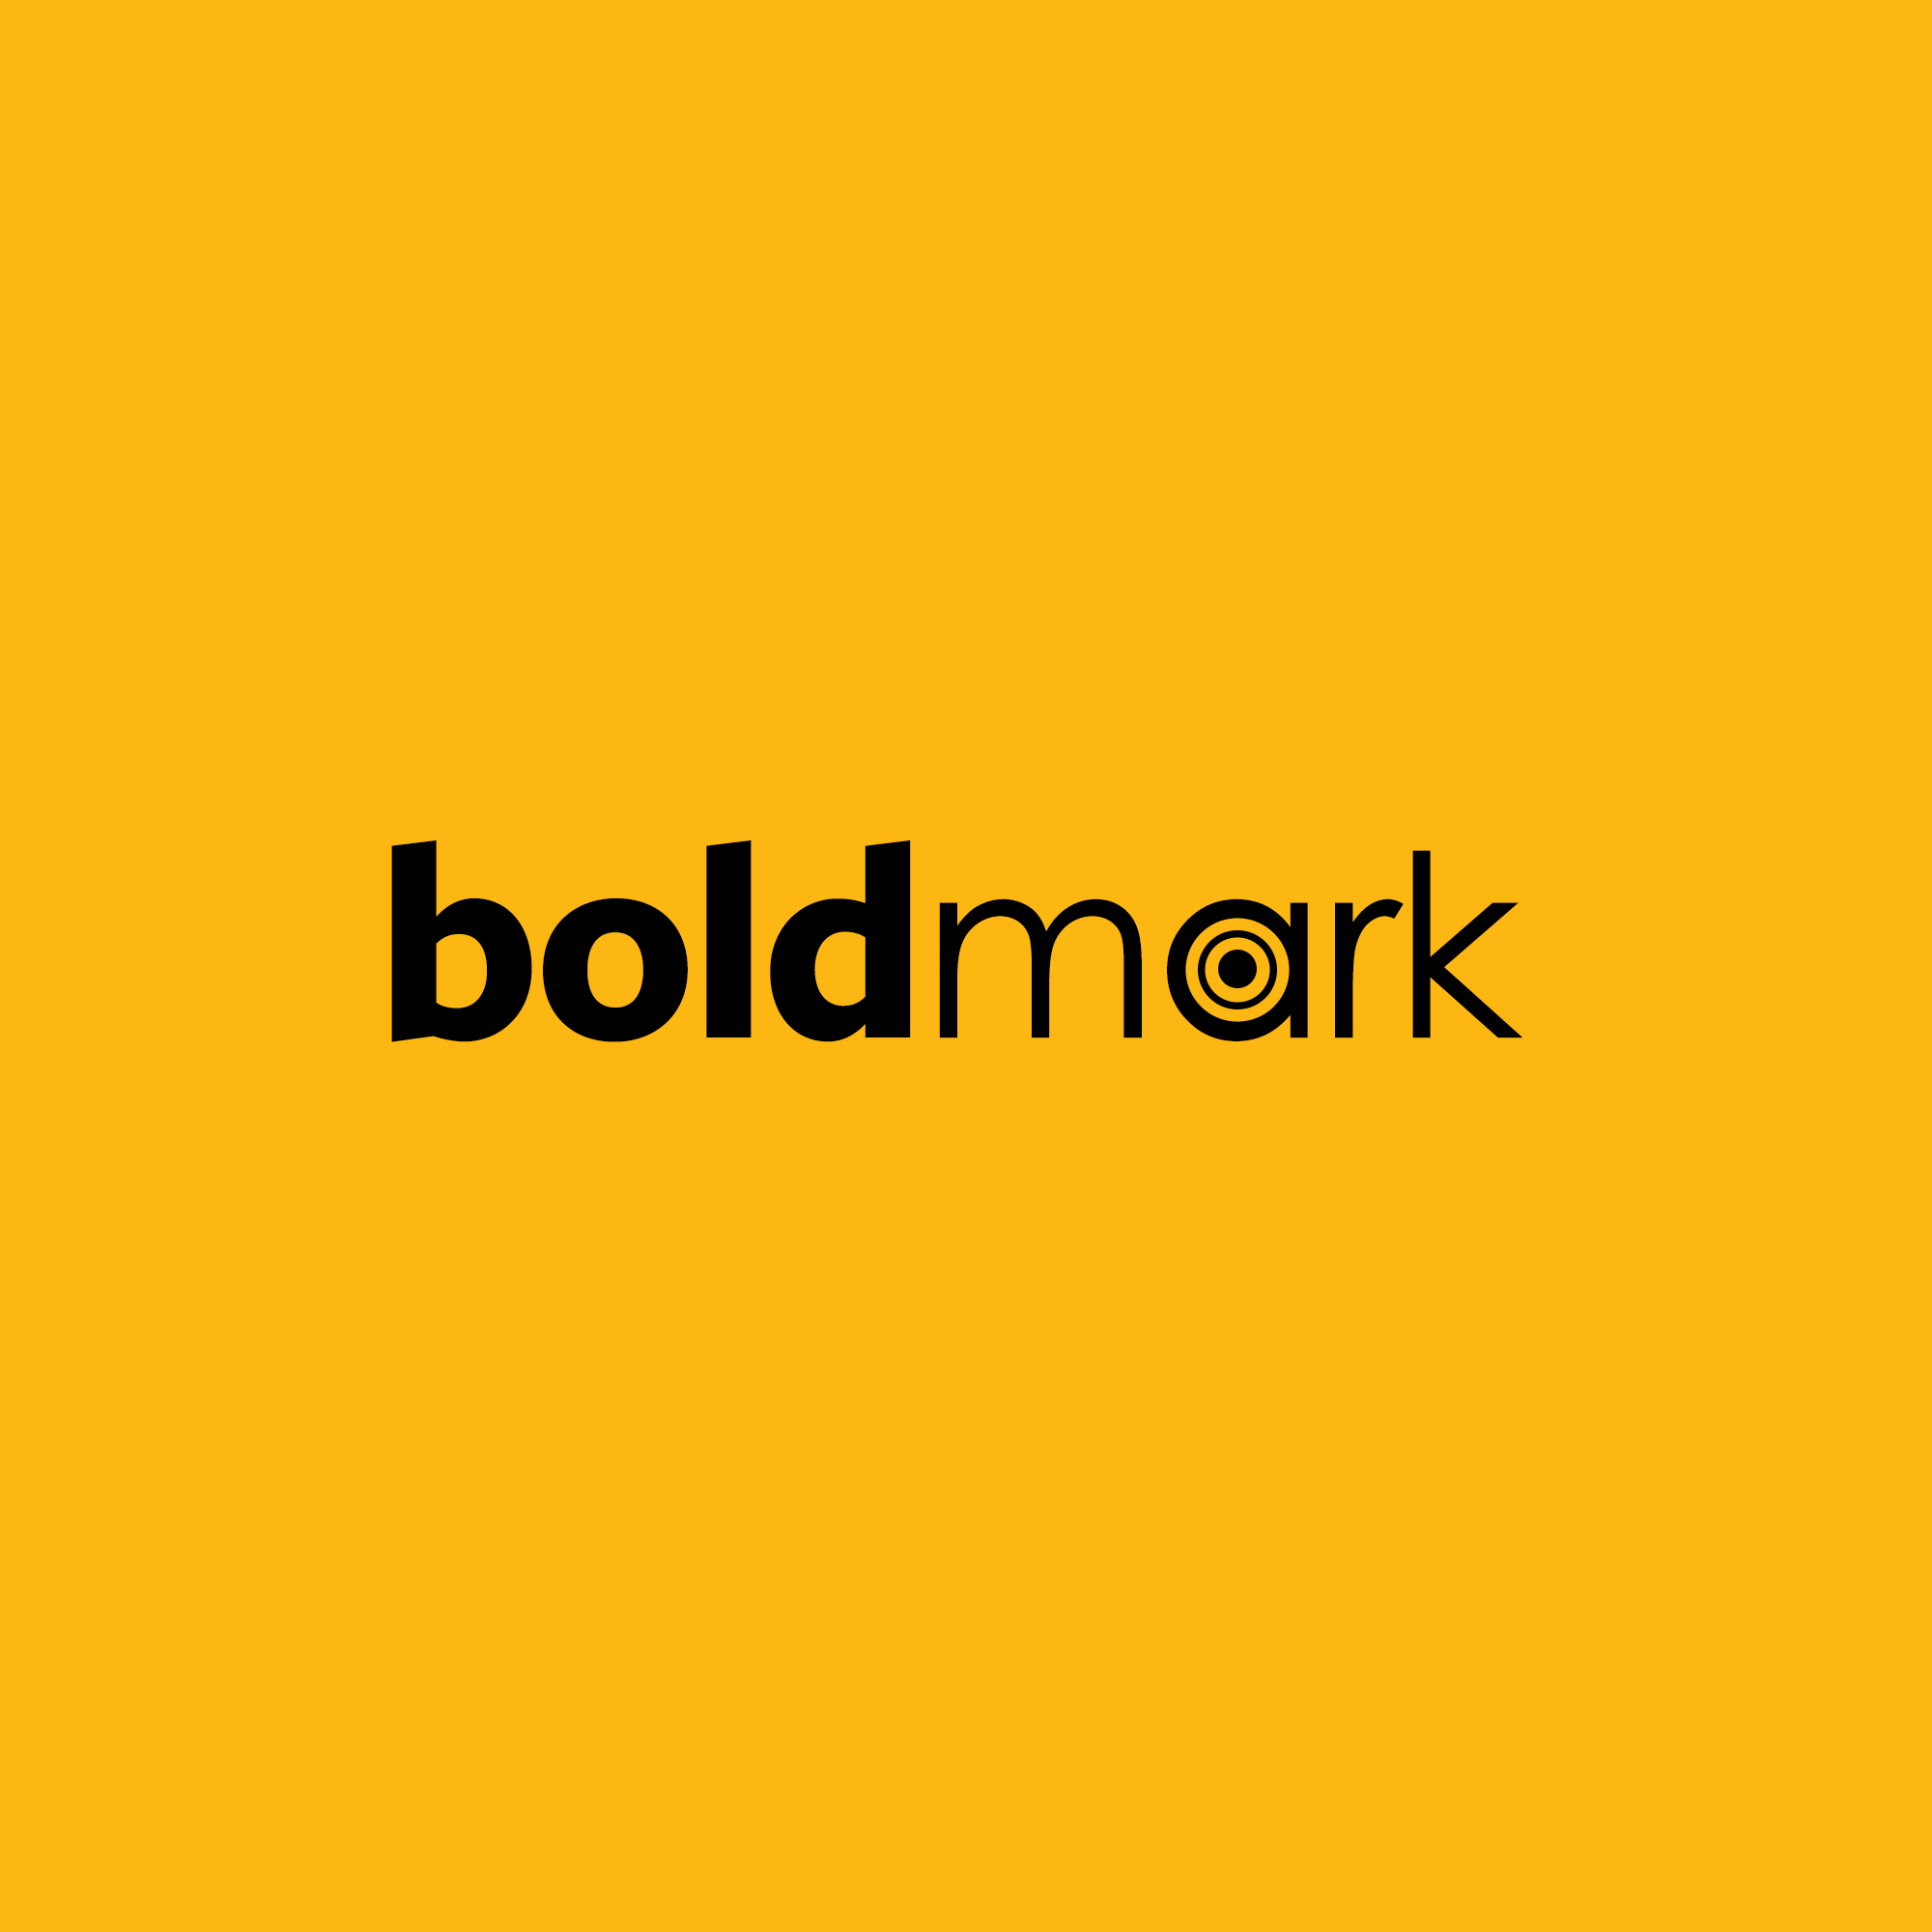 Boldmark inc